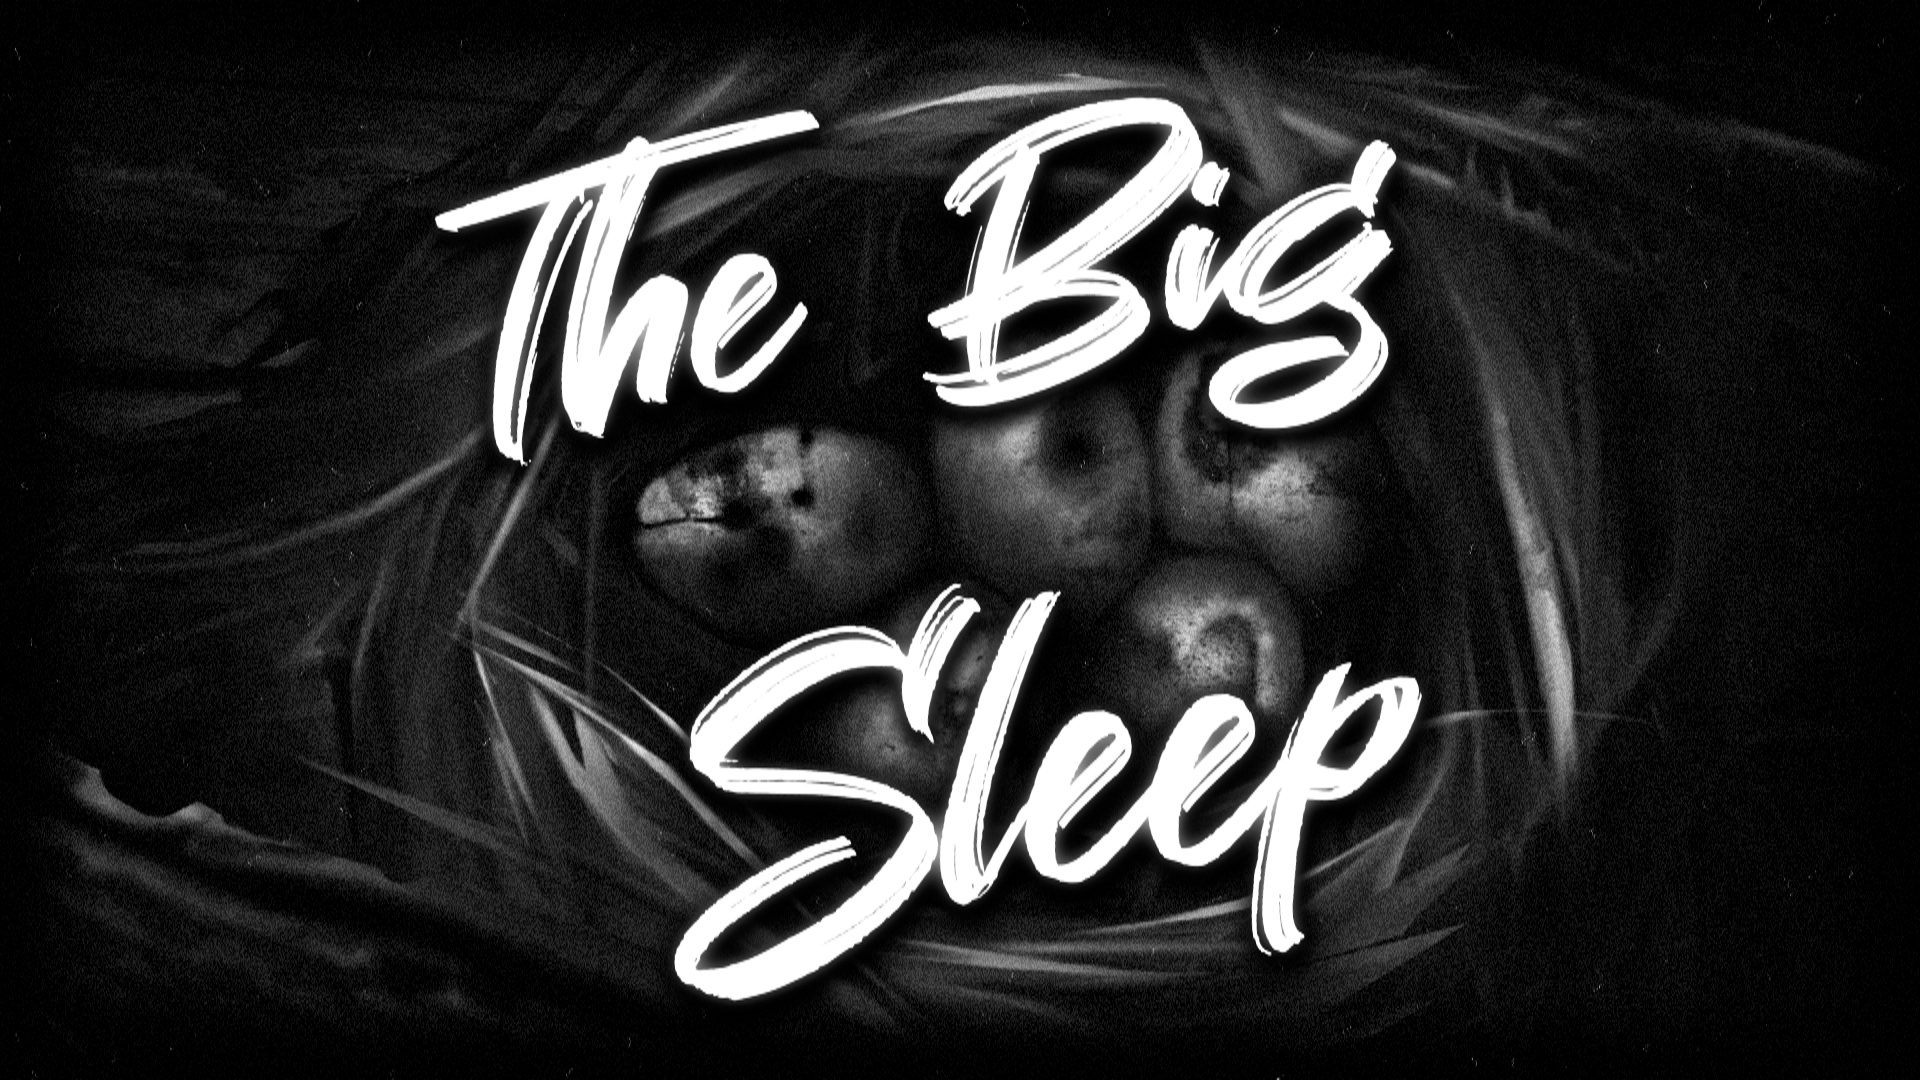 Icon for The Big Sleep